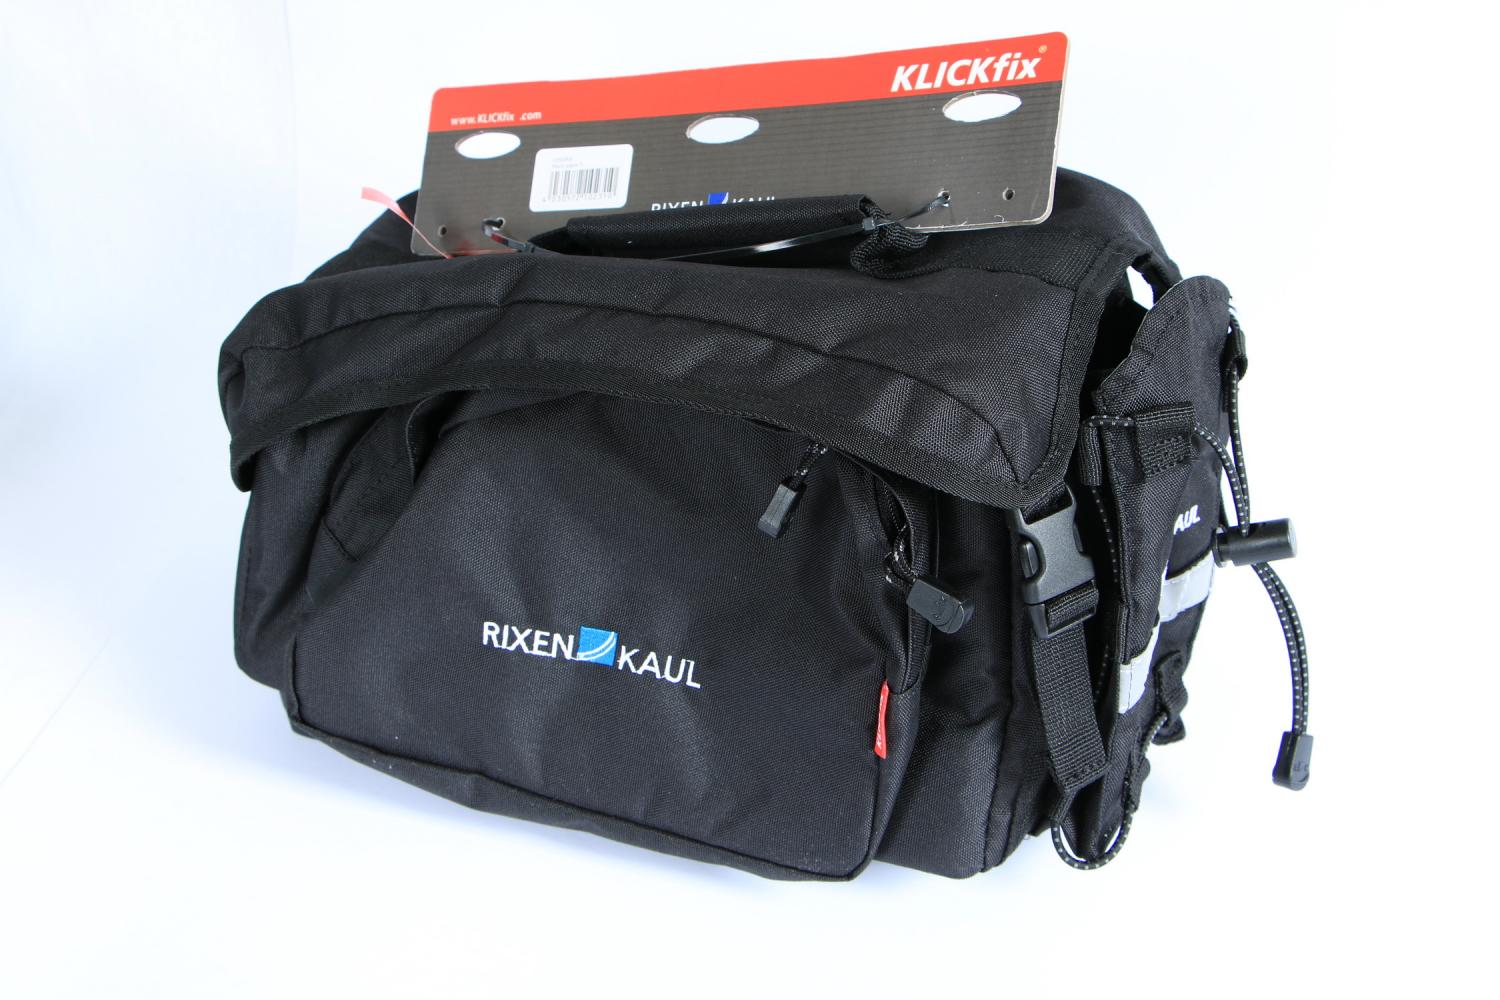 Rixen Kaul Klickfix Rackpack 1 Fahrradtasche Tasche für Racktime Gepäckträger B-Ware